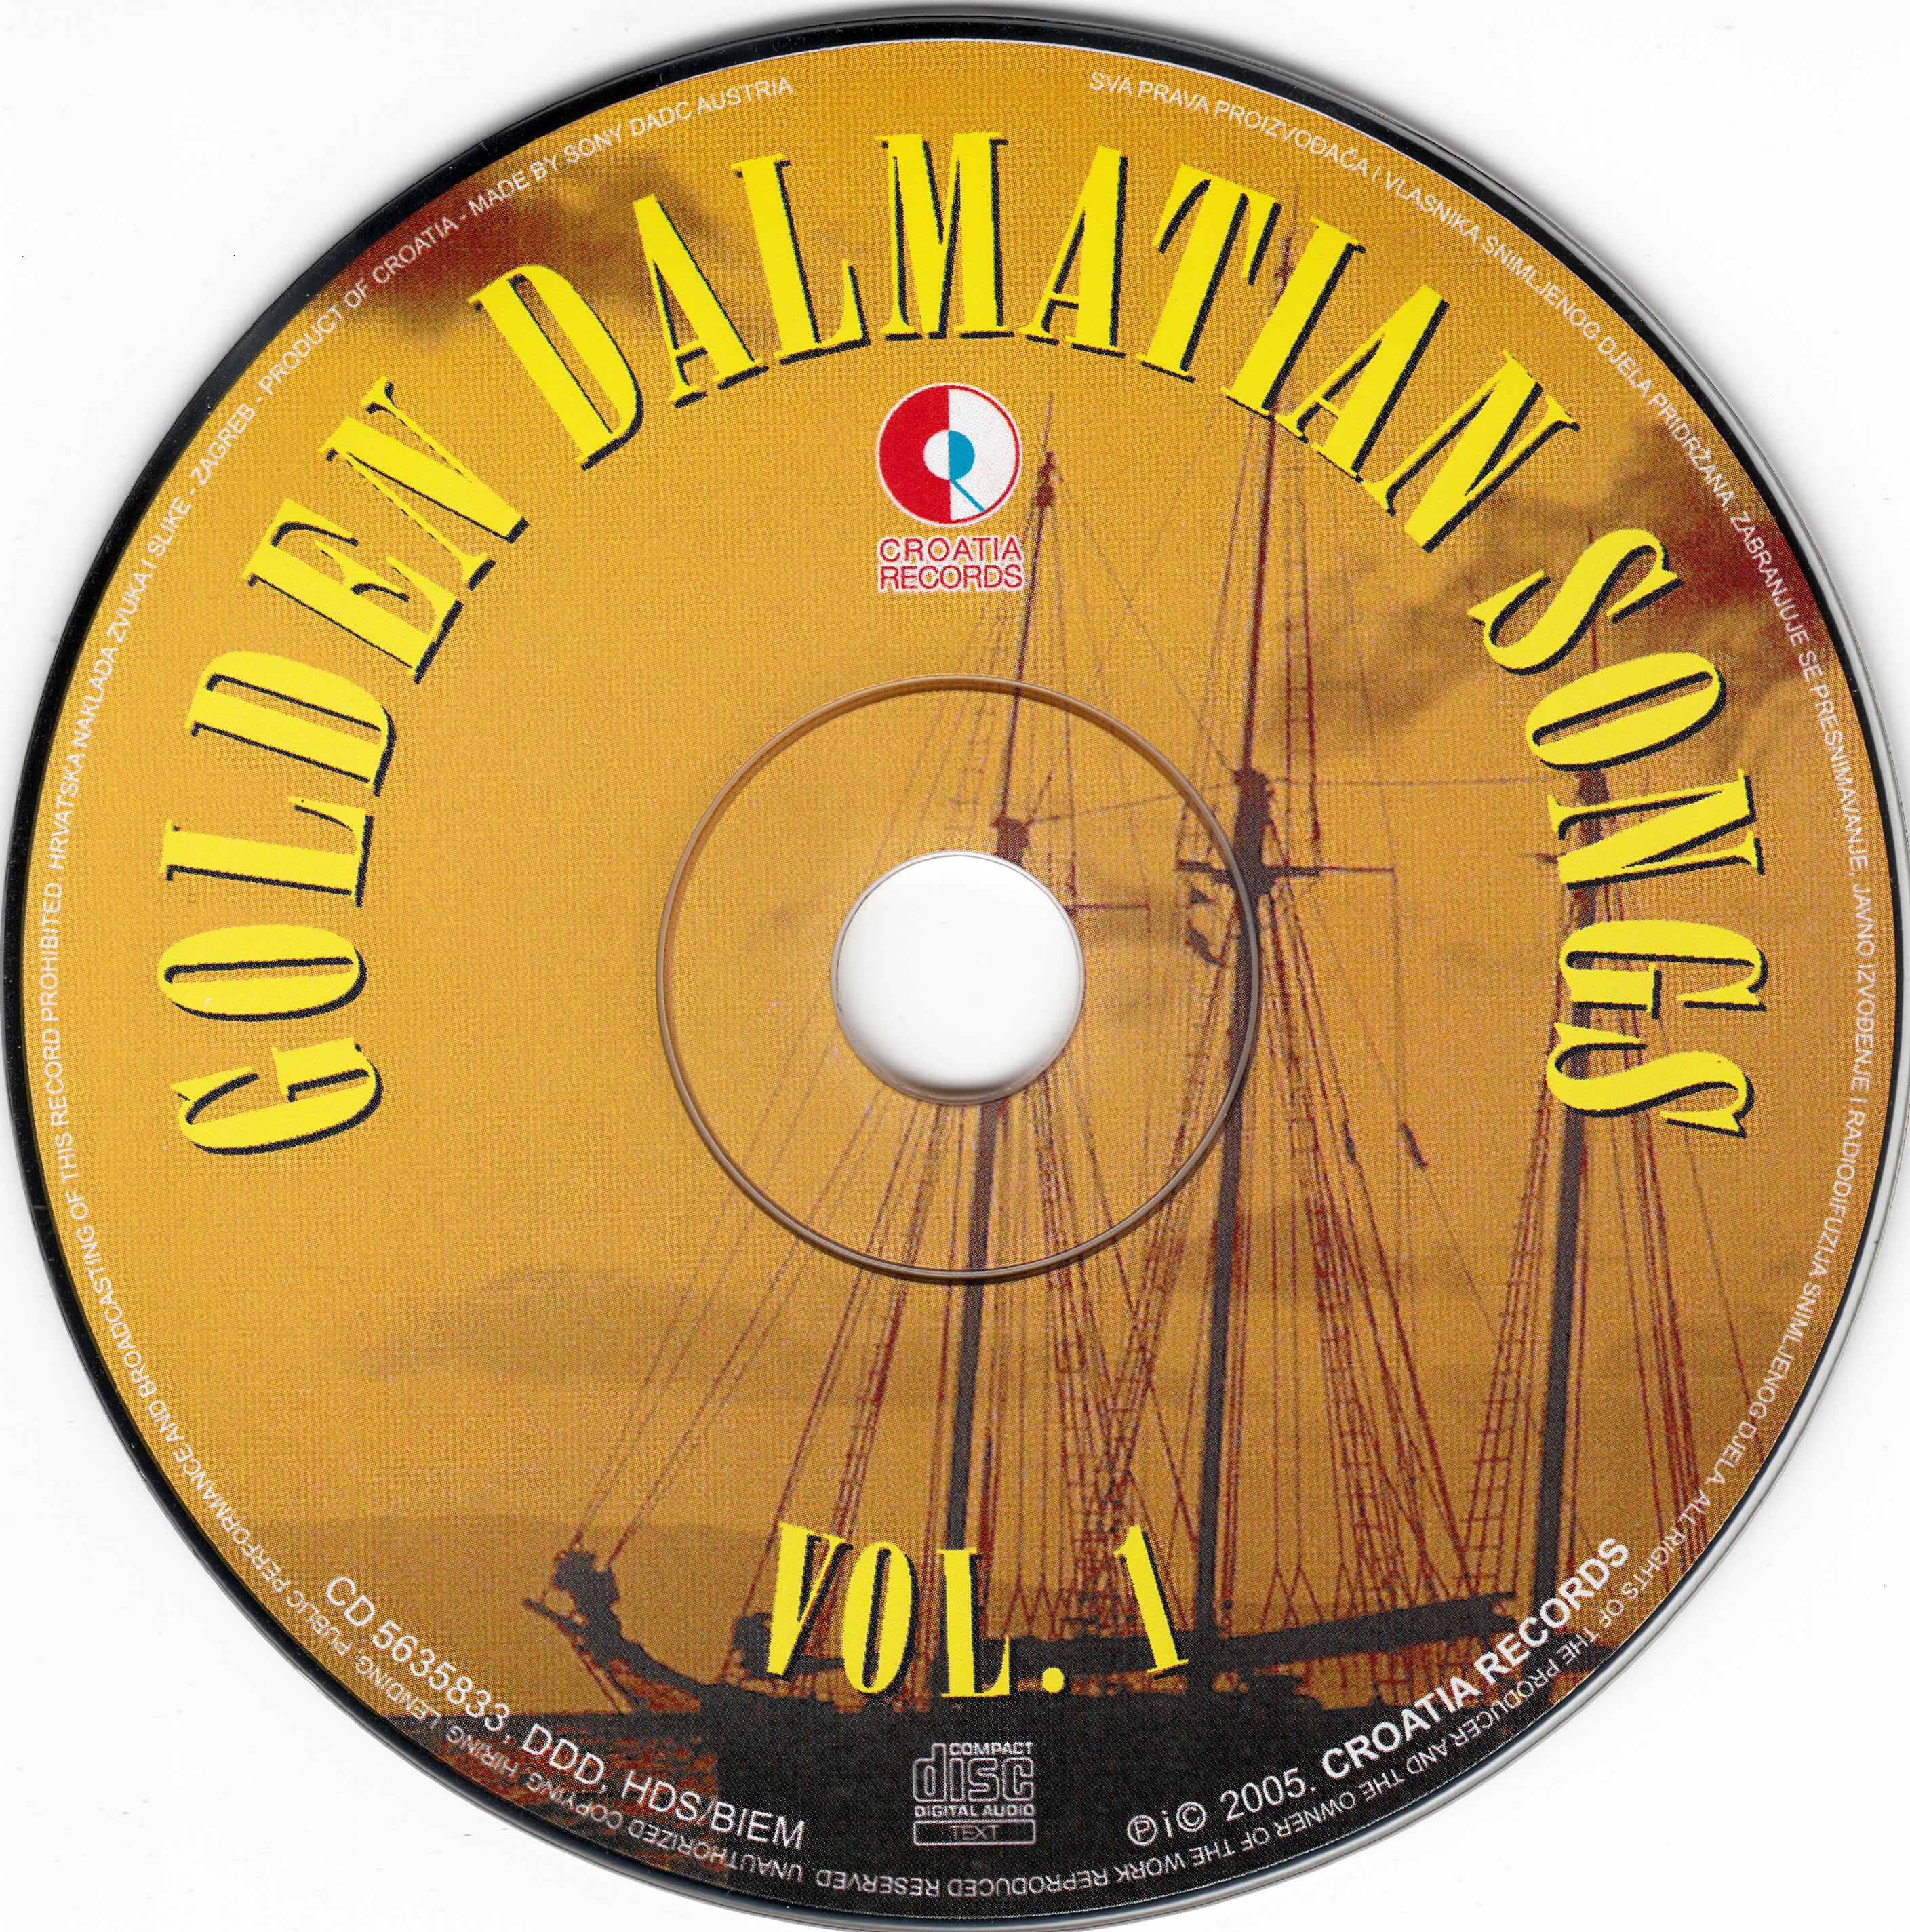 Golden Dalmatian songs vol 1 2005 CD cd